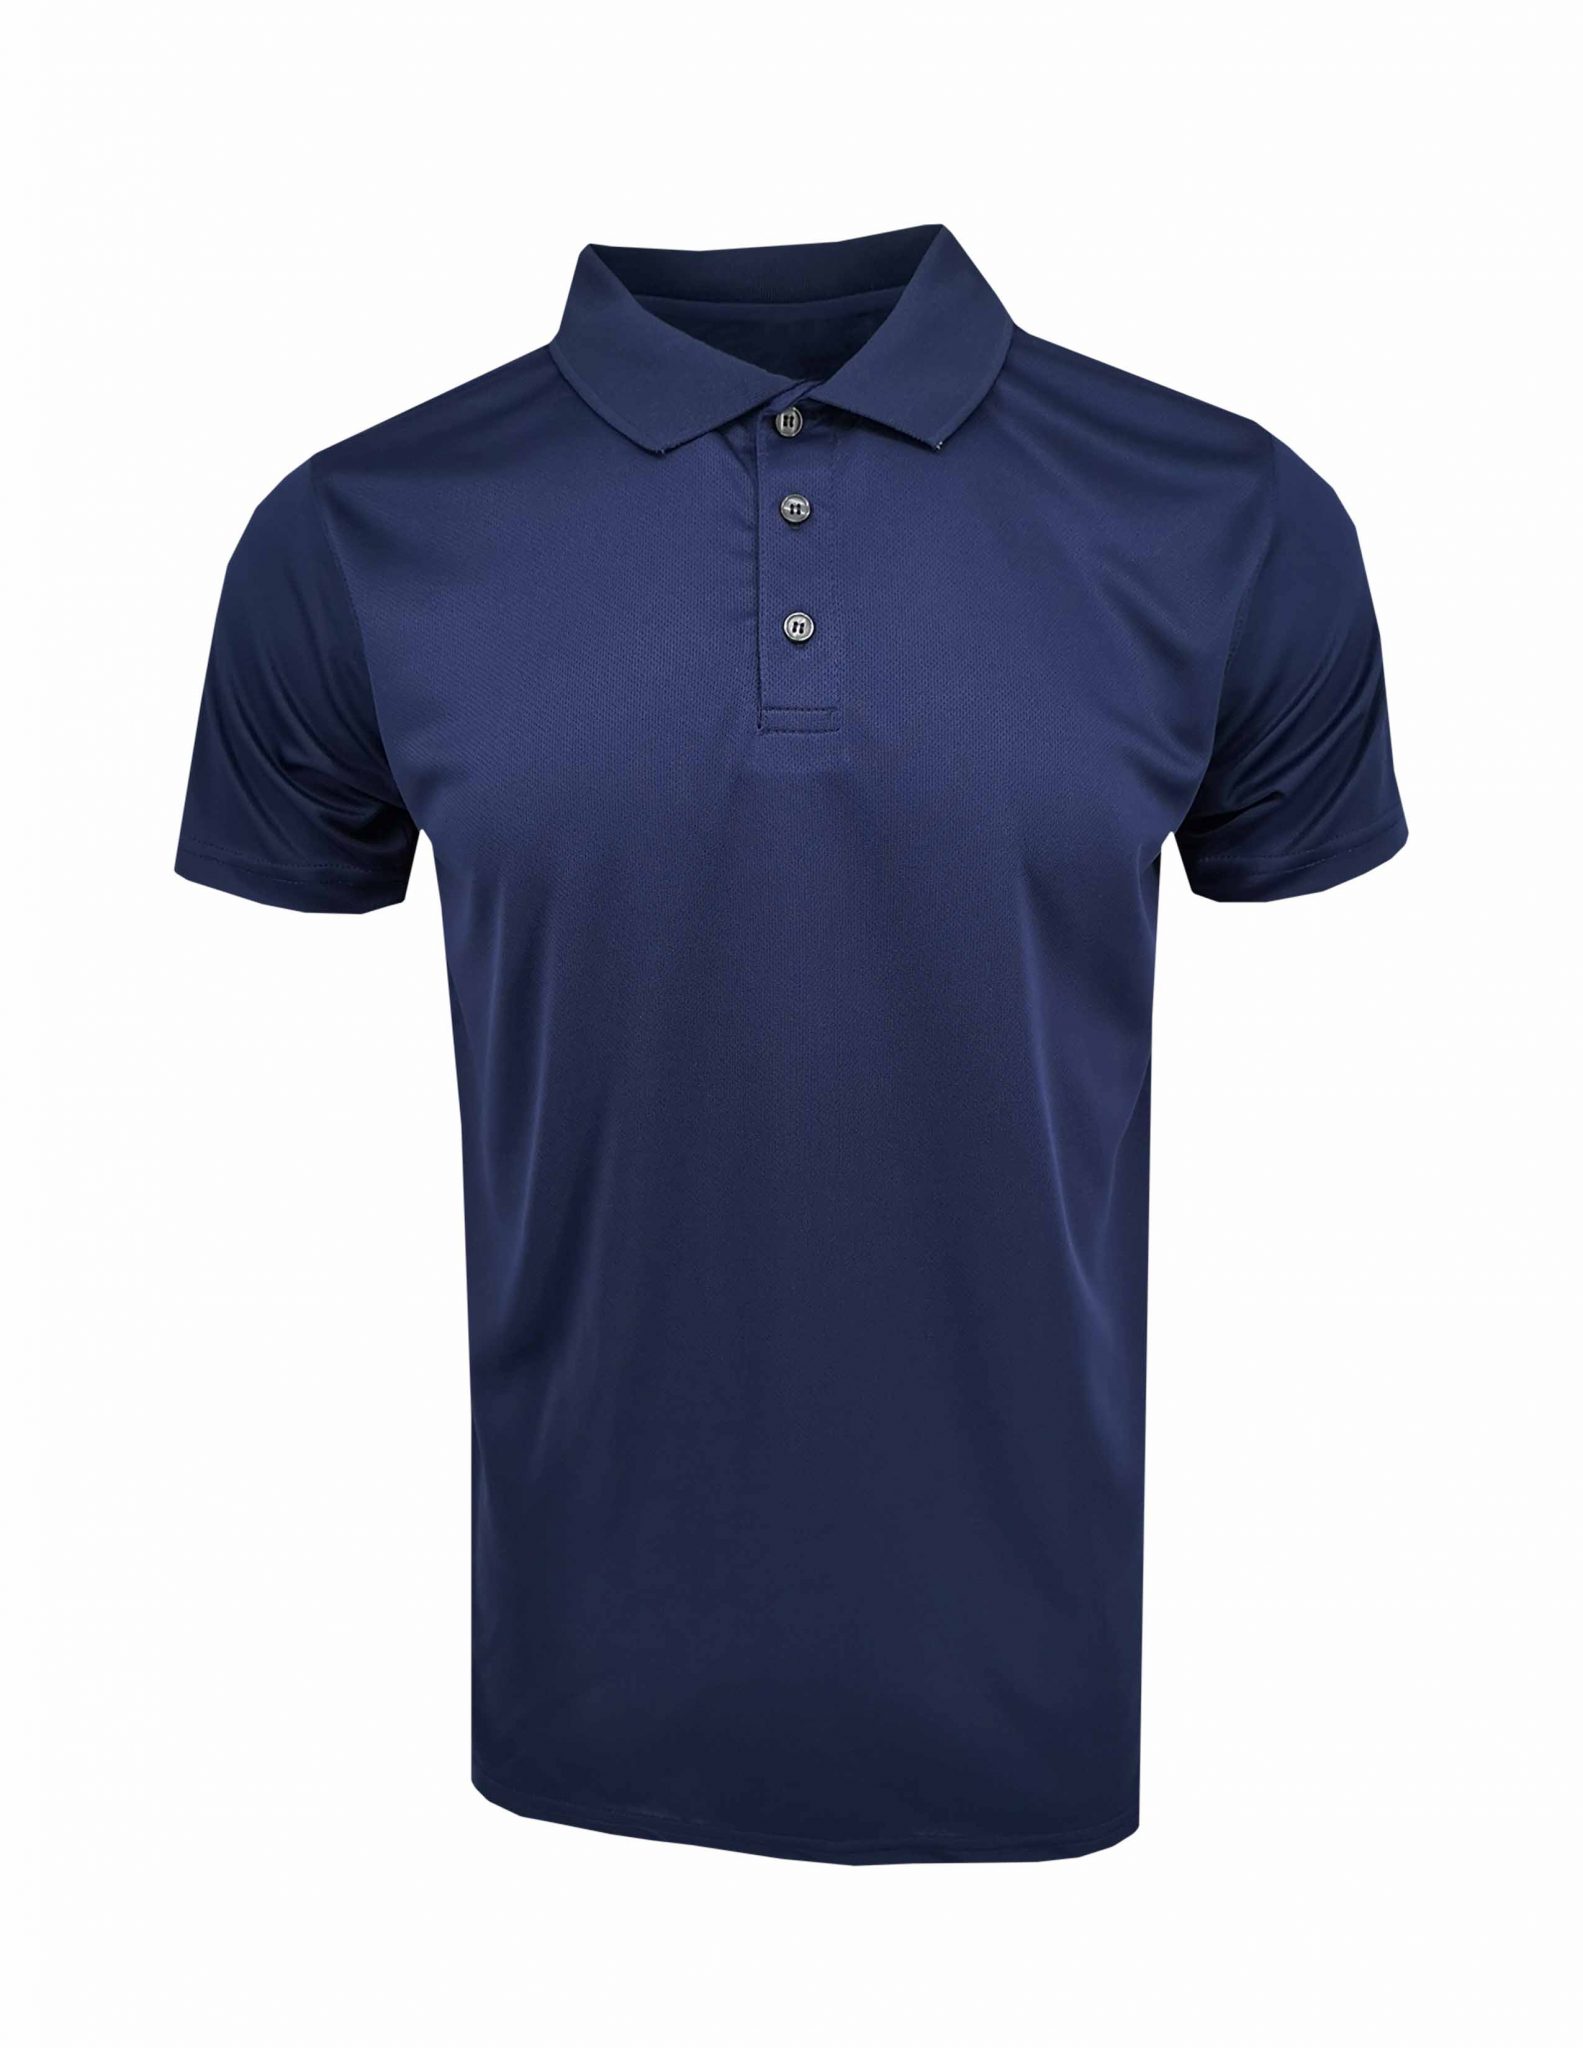 QDP 5309 Navy Blue - Rightway Basic T-Shirt | Basic T-Shirt Supplier ...